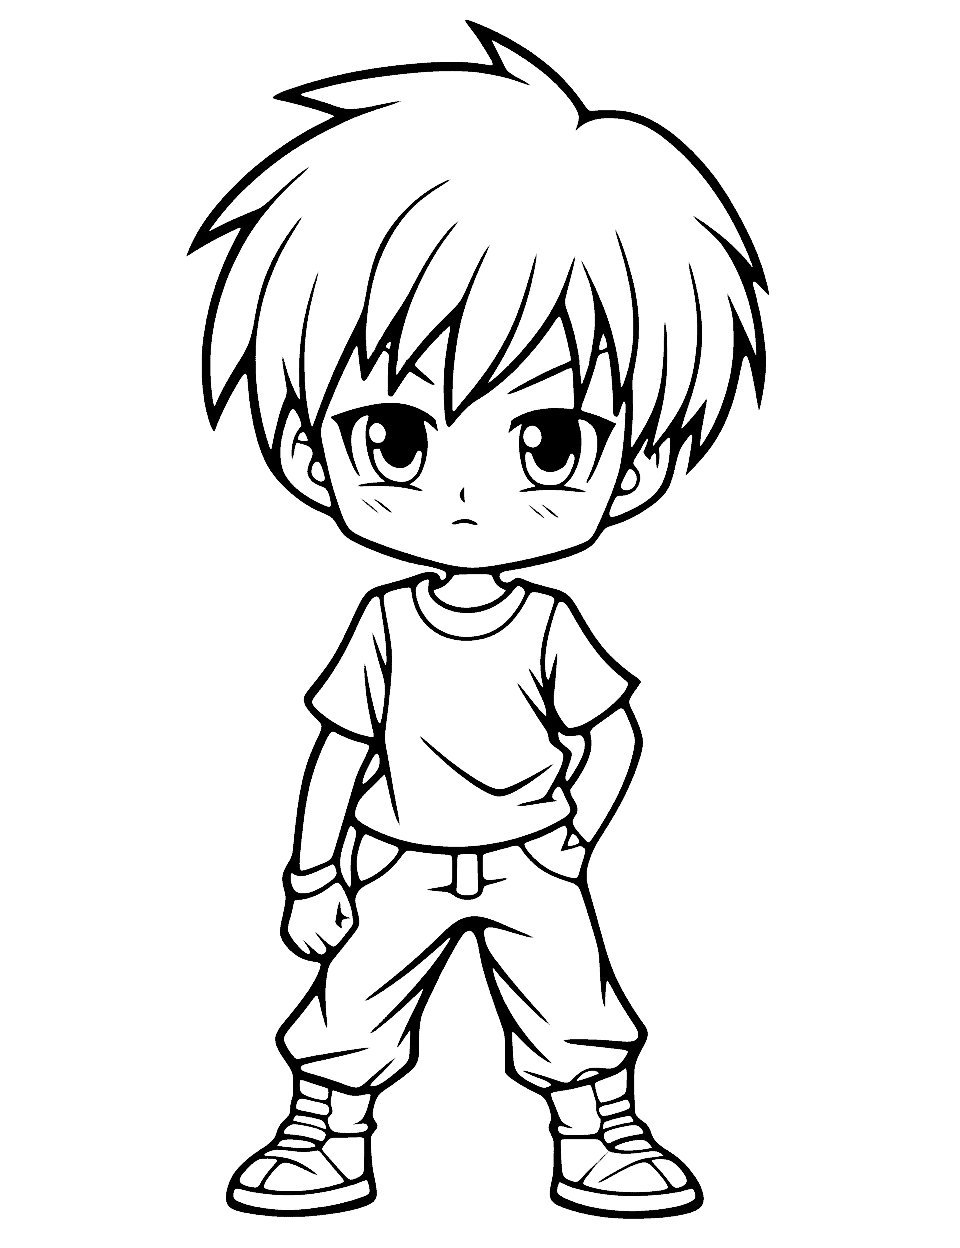 Kawaii Chibi Character Anime Coloring Page - Design a kawaii chibi character with oversized head and small body.